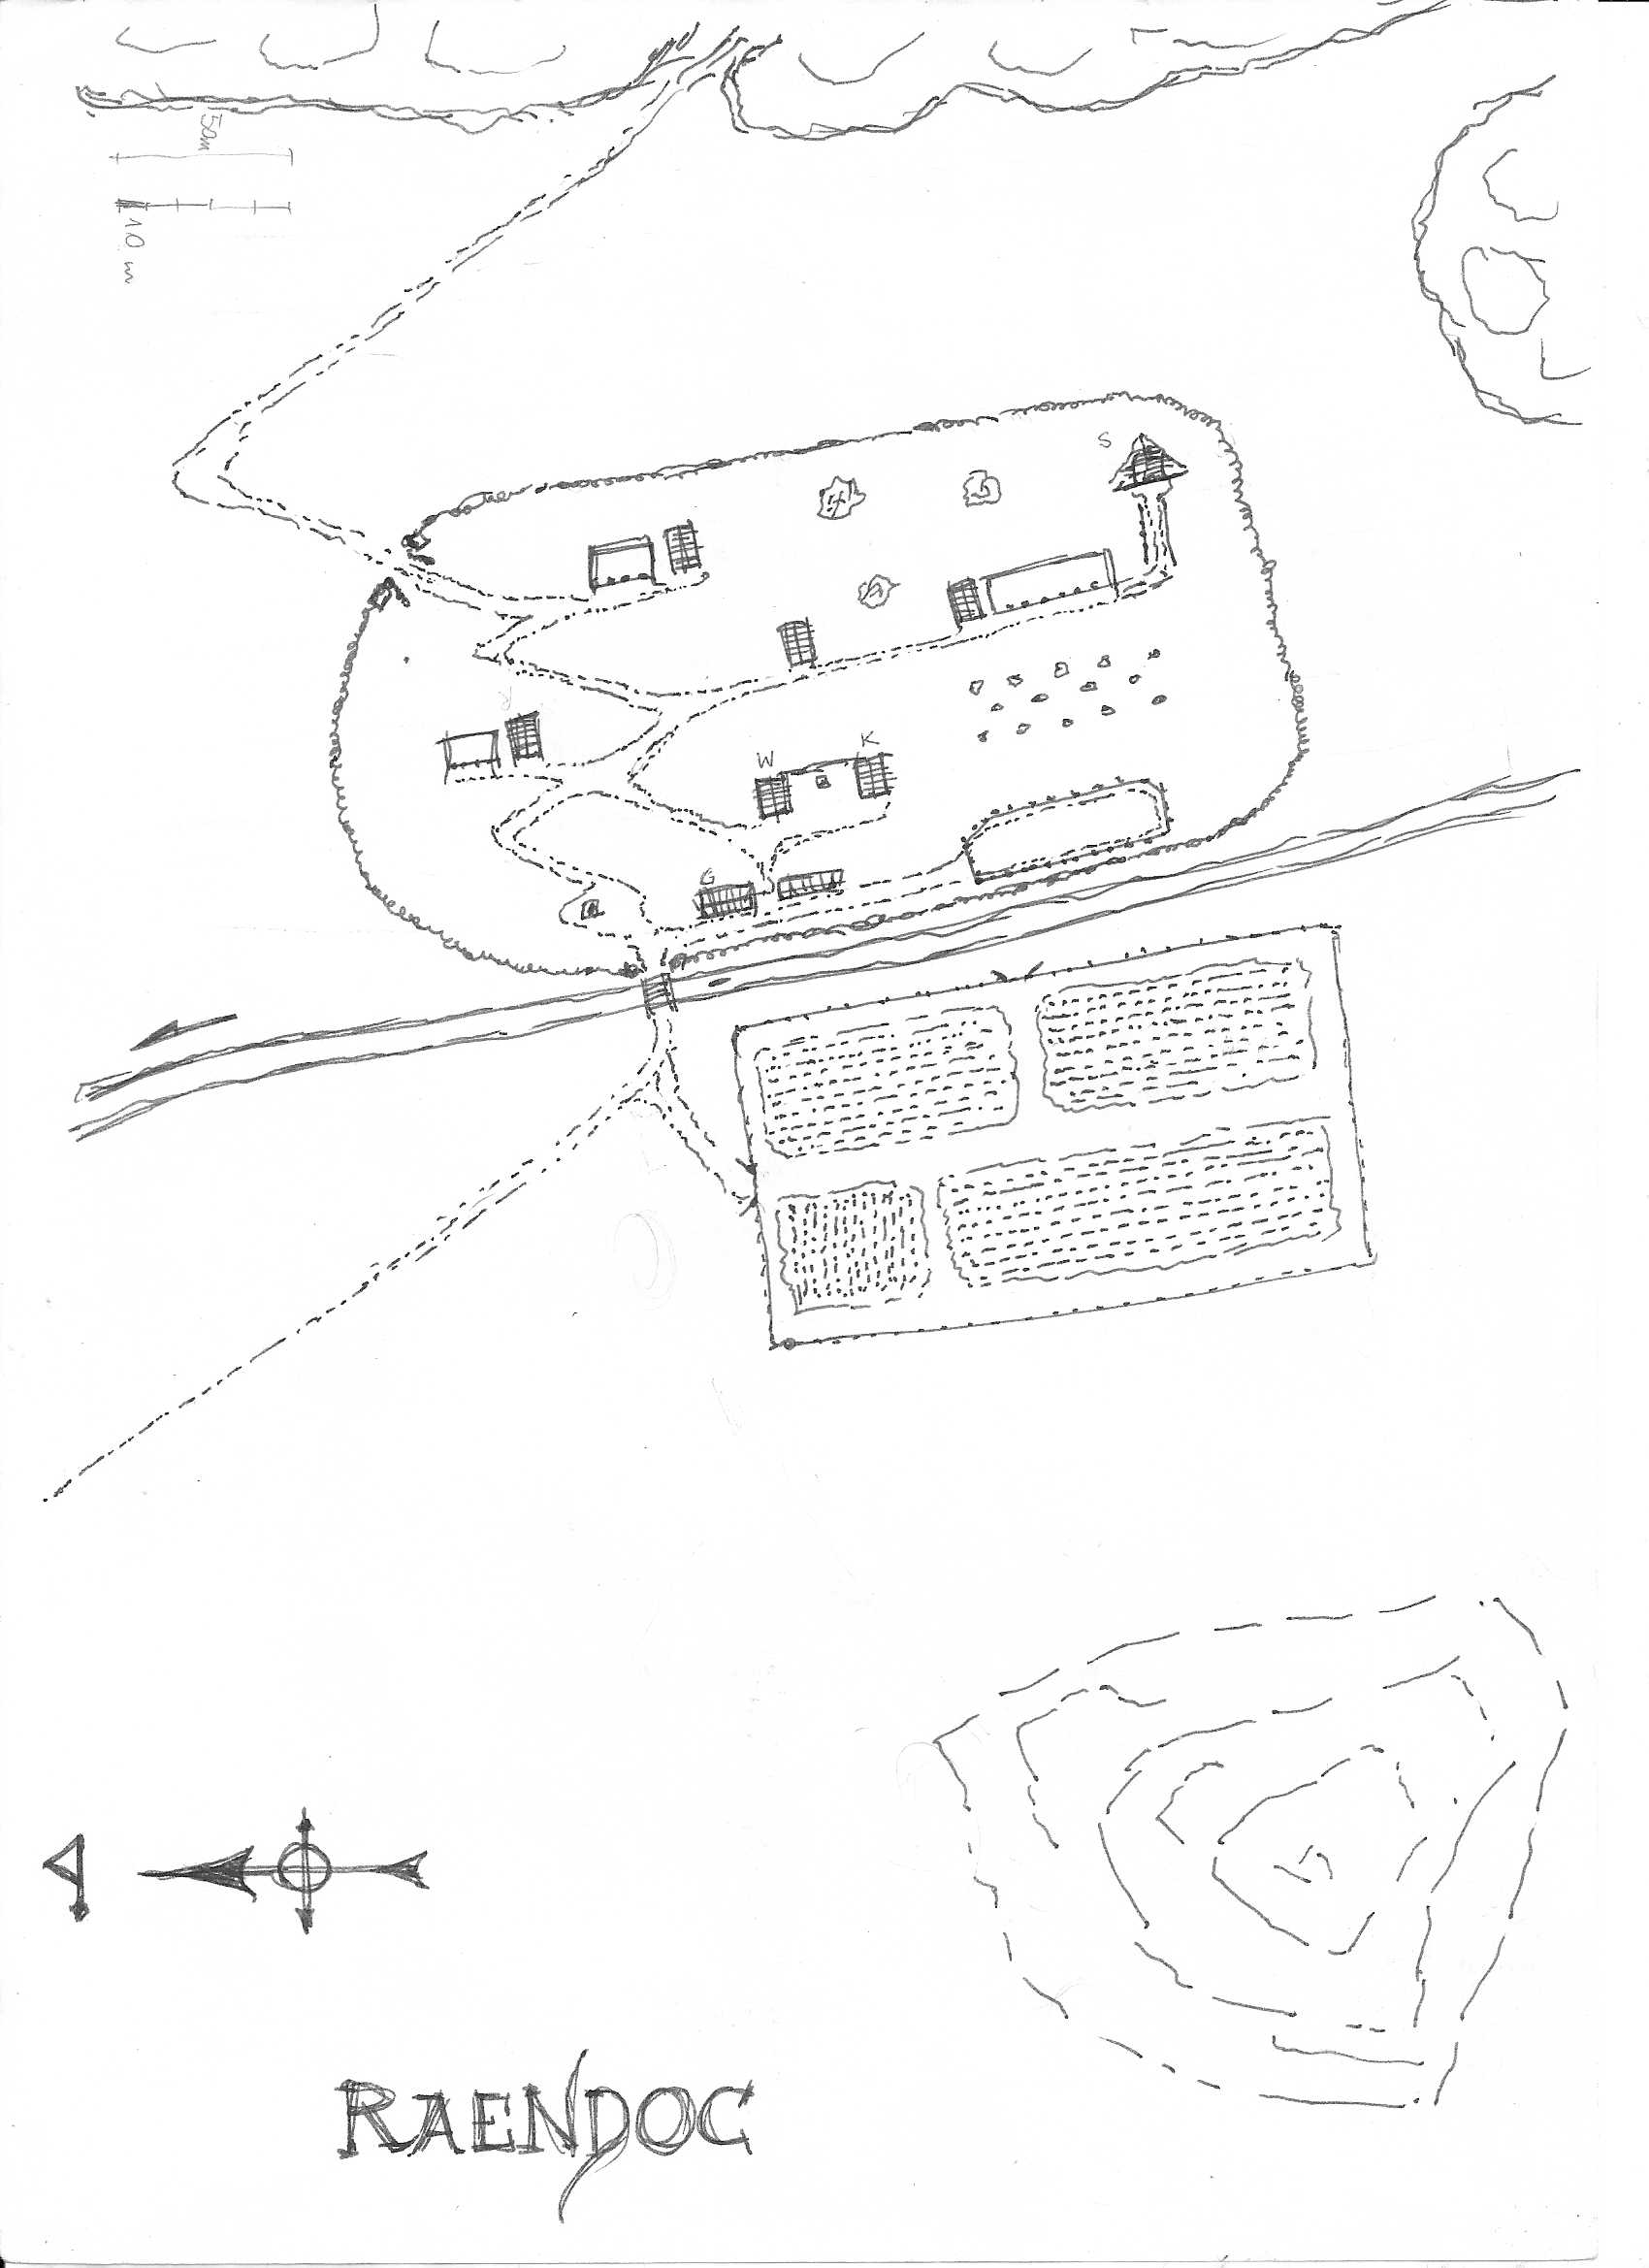 Plan osady Raendoc